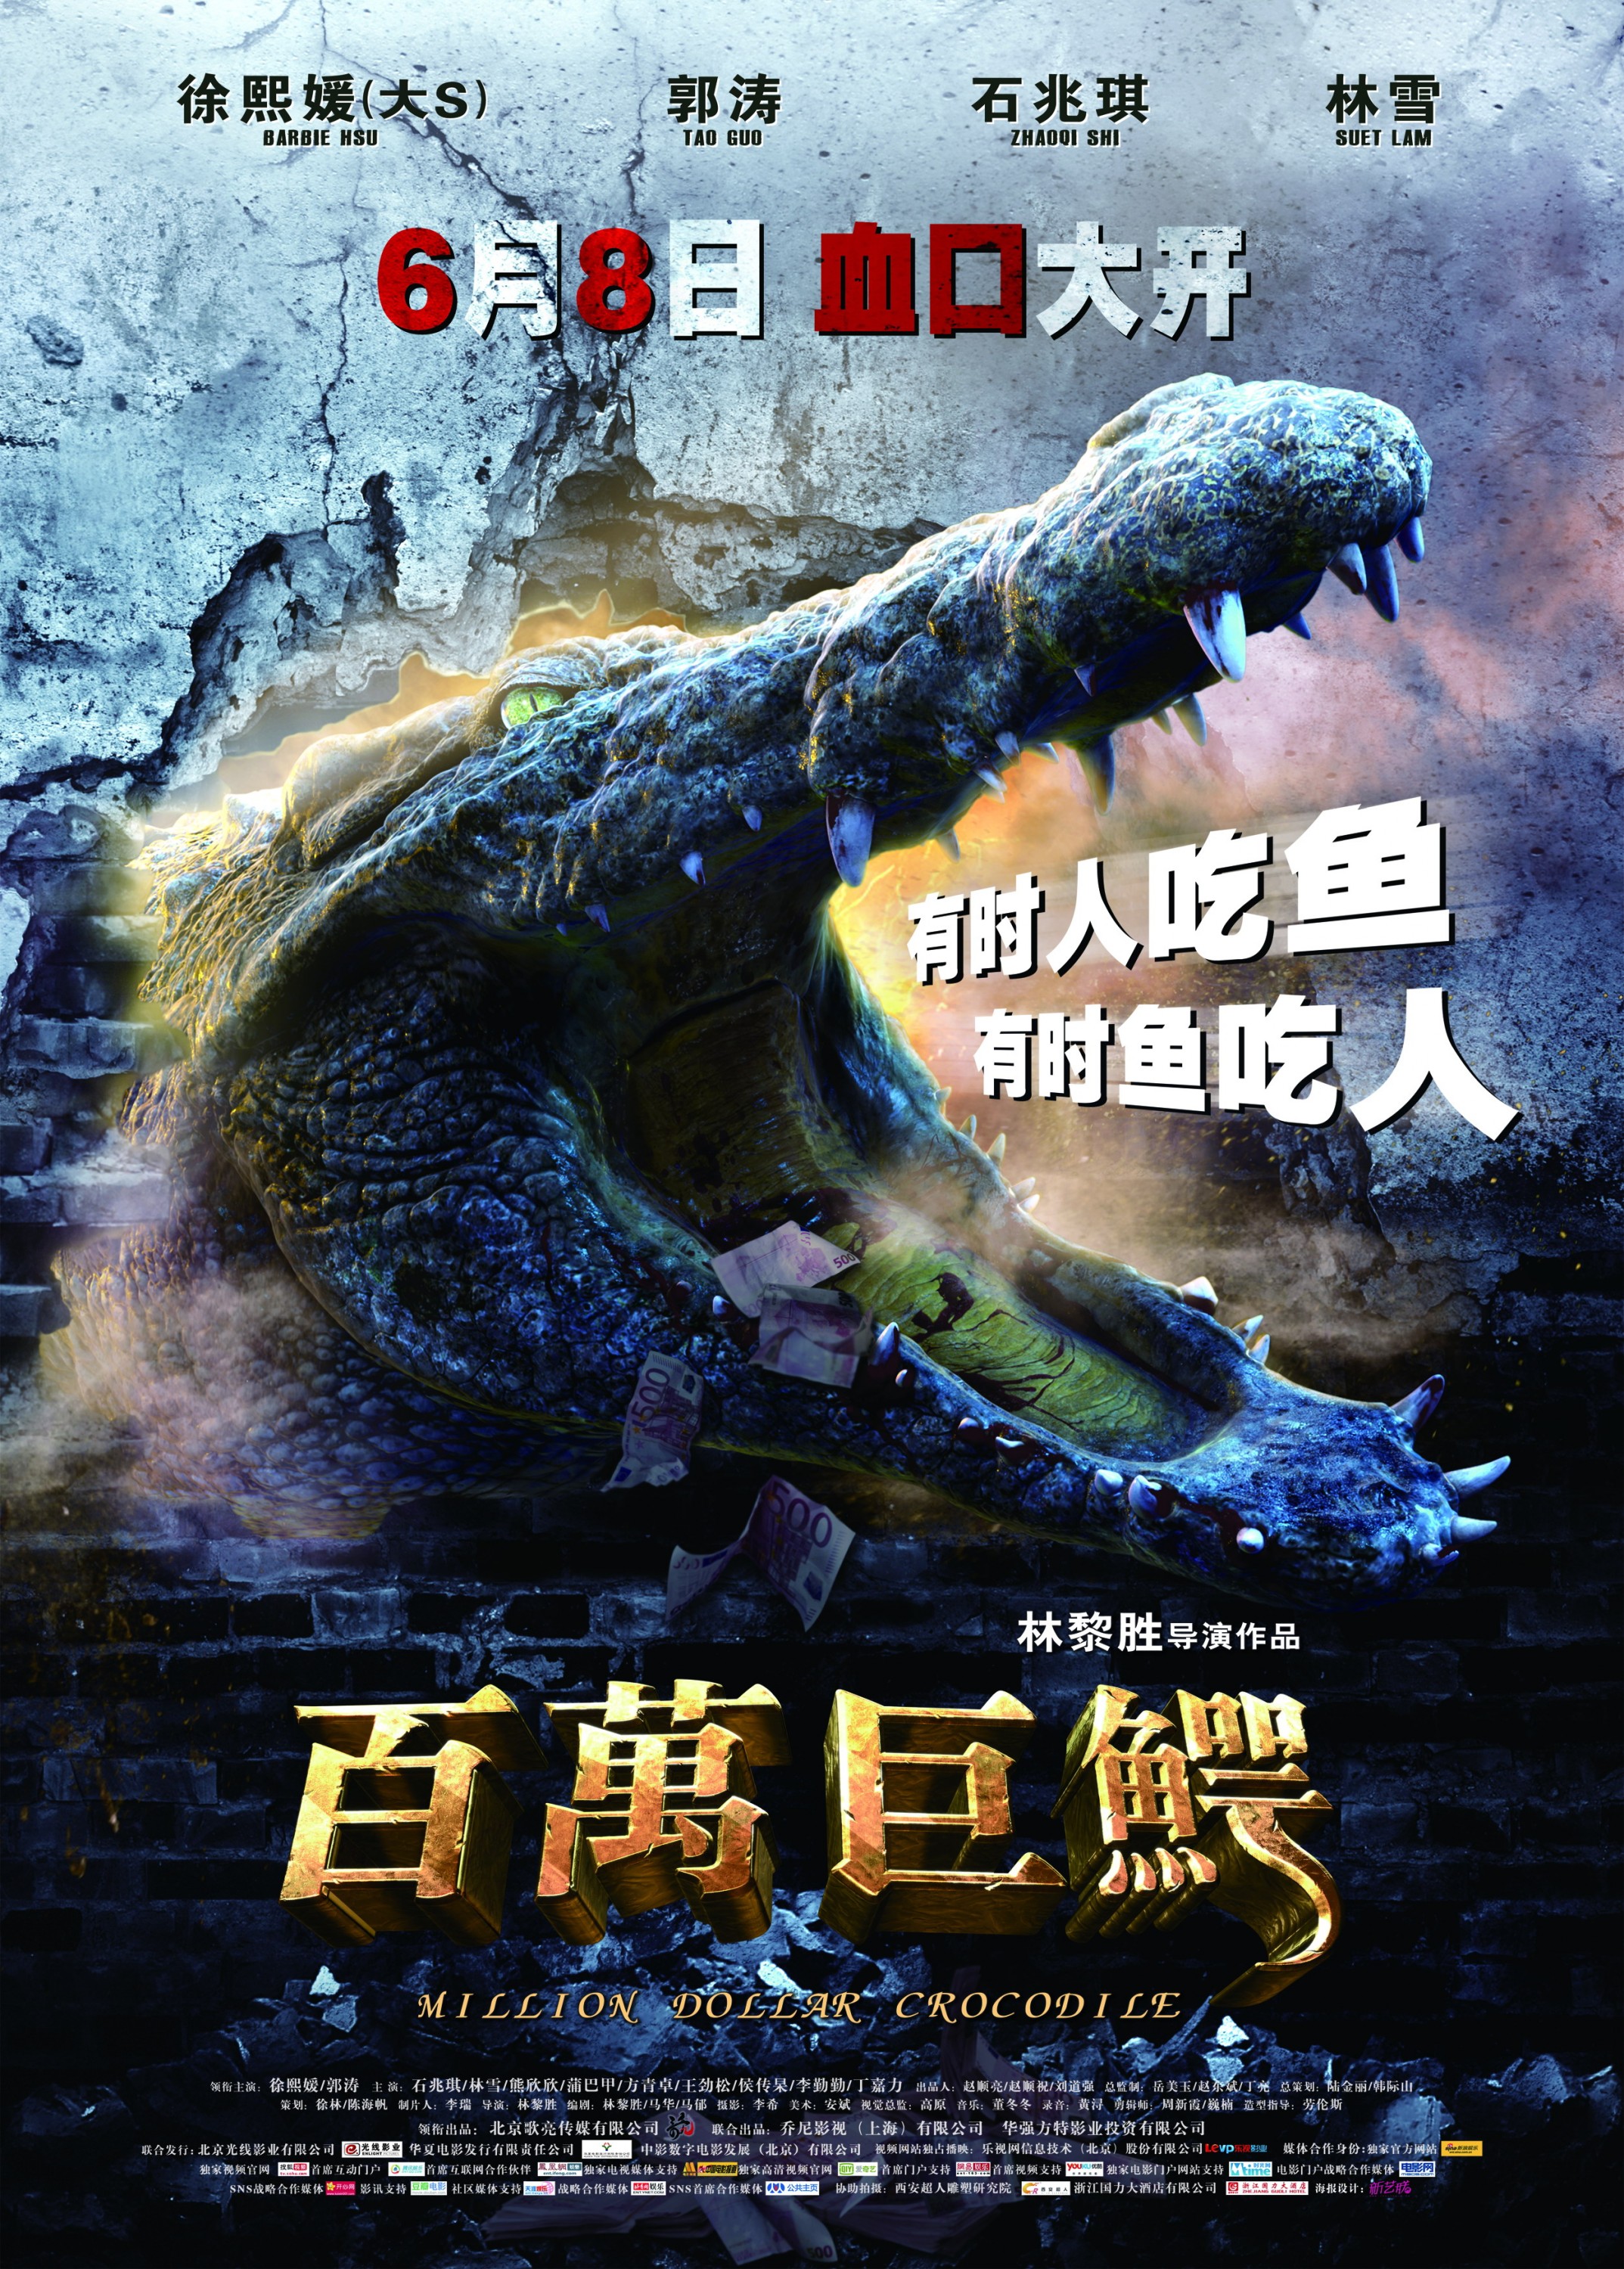 Mega Sized Movie Poster Image for Million Dollar Crocodile (#1 of 5)